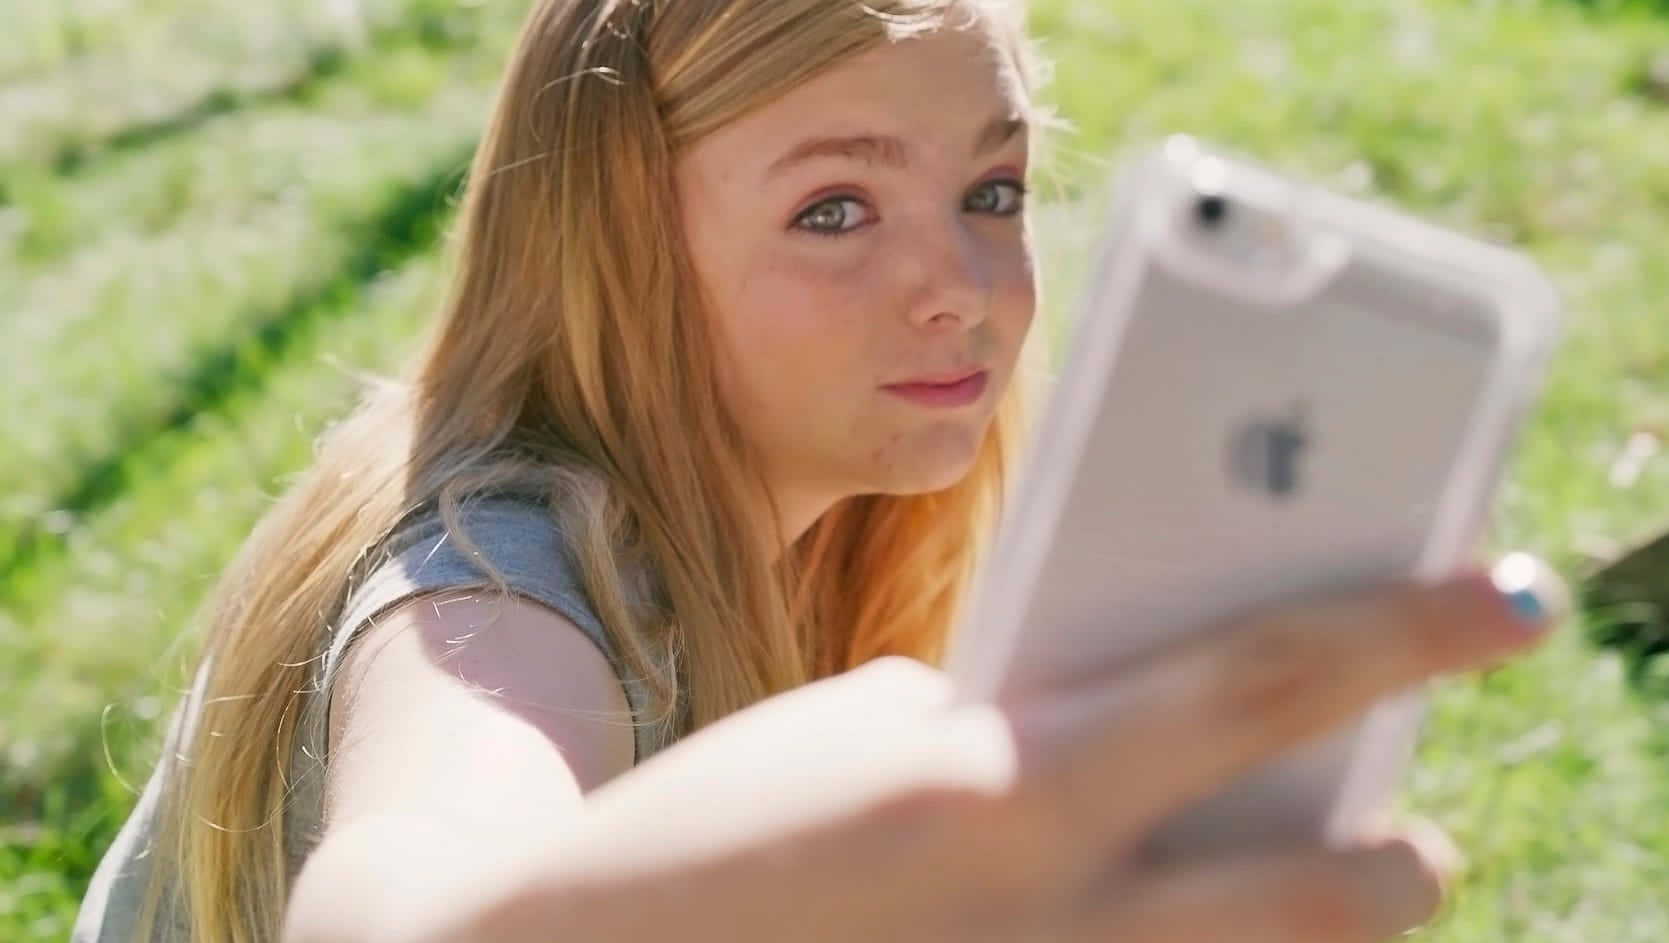 An Eighth Grade Girl Absorbed In Her Digital World Wallpaper